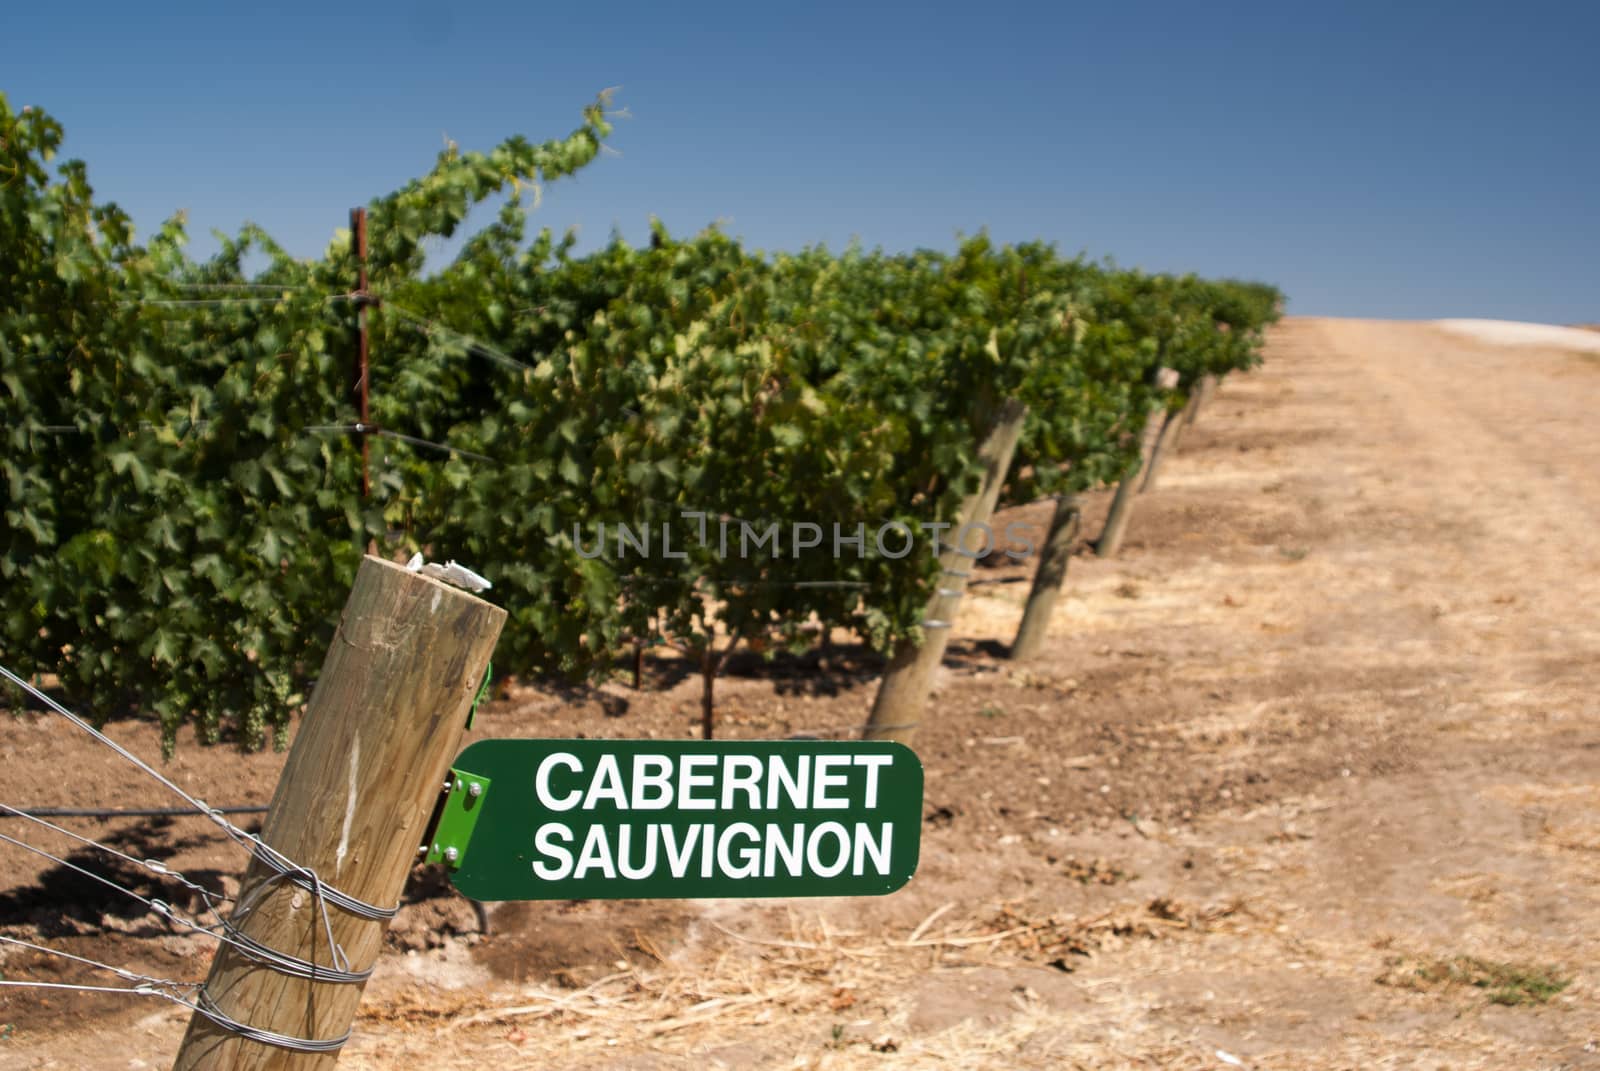 Cabernet Sauvignon Sign in California Vineyard by emattil